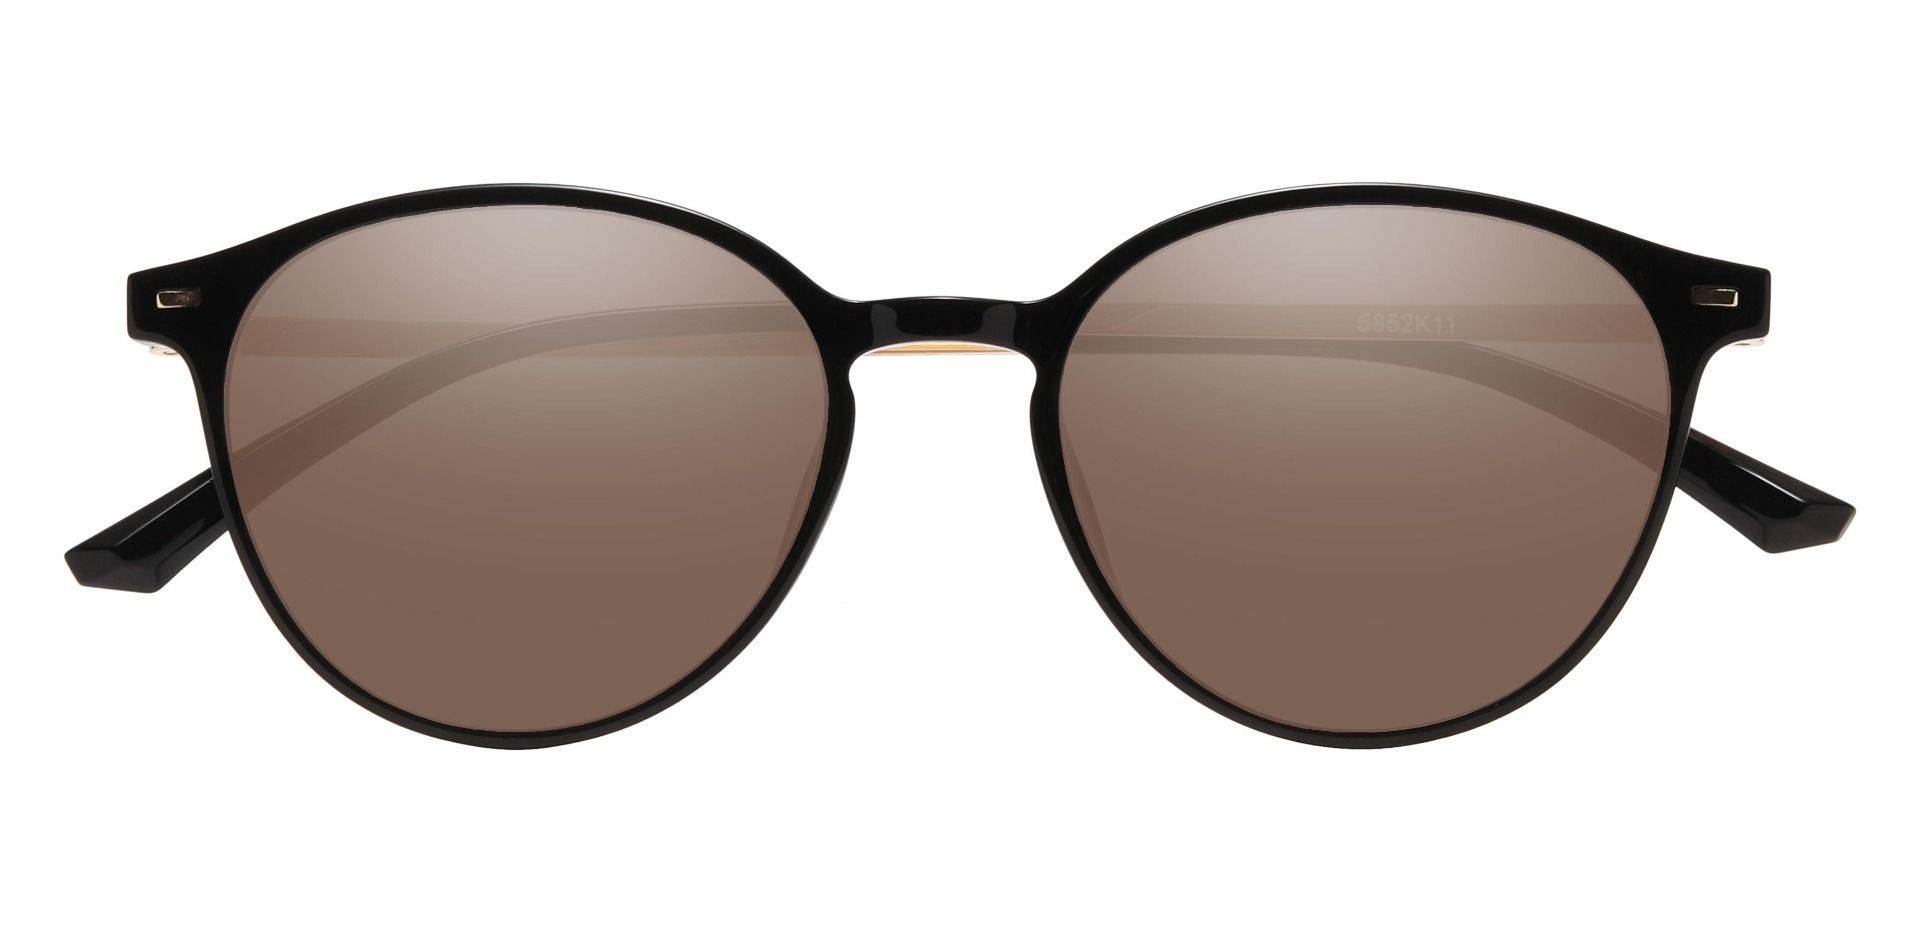 Springer Round Lined Bifocal Sunglasses - Black Frame With Brown Lenses